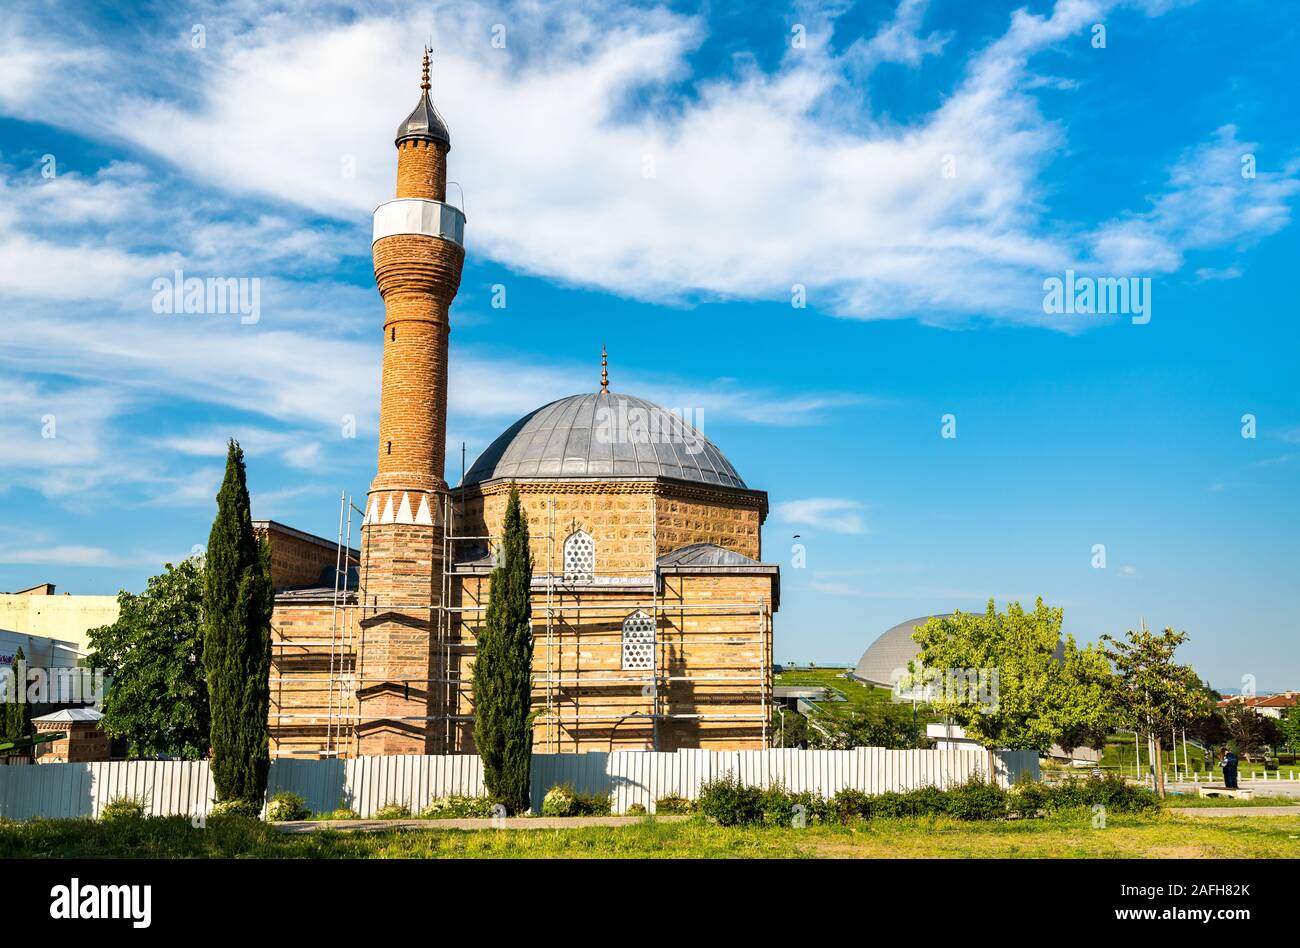 Kanberler Cami Mosque in Bursa, Turkey Stock Photo